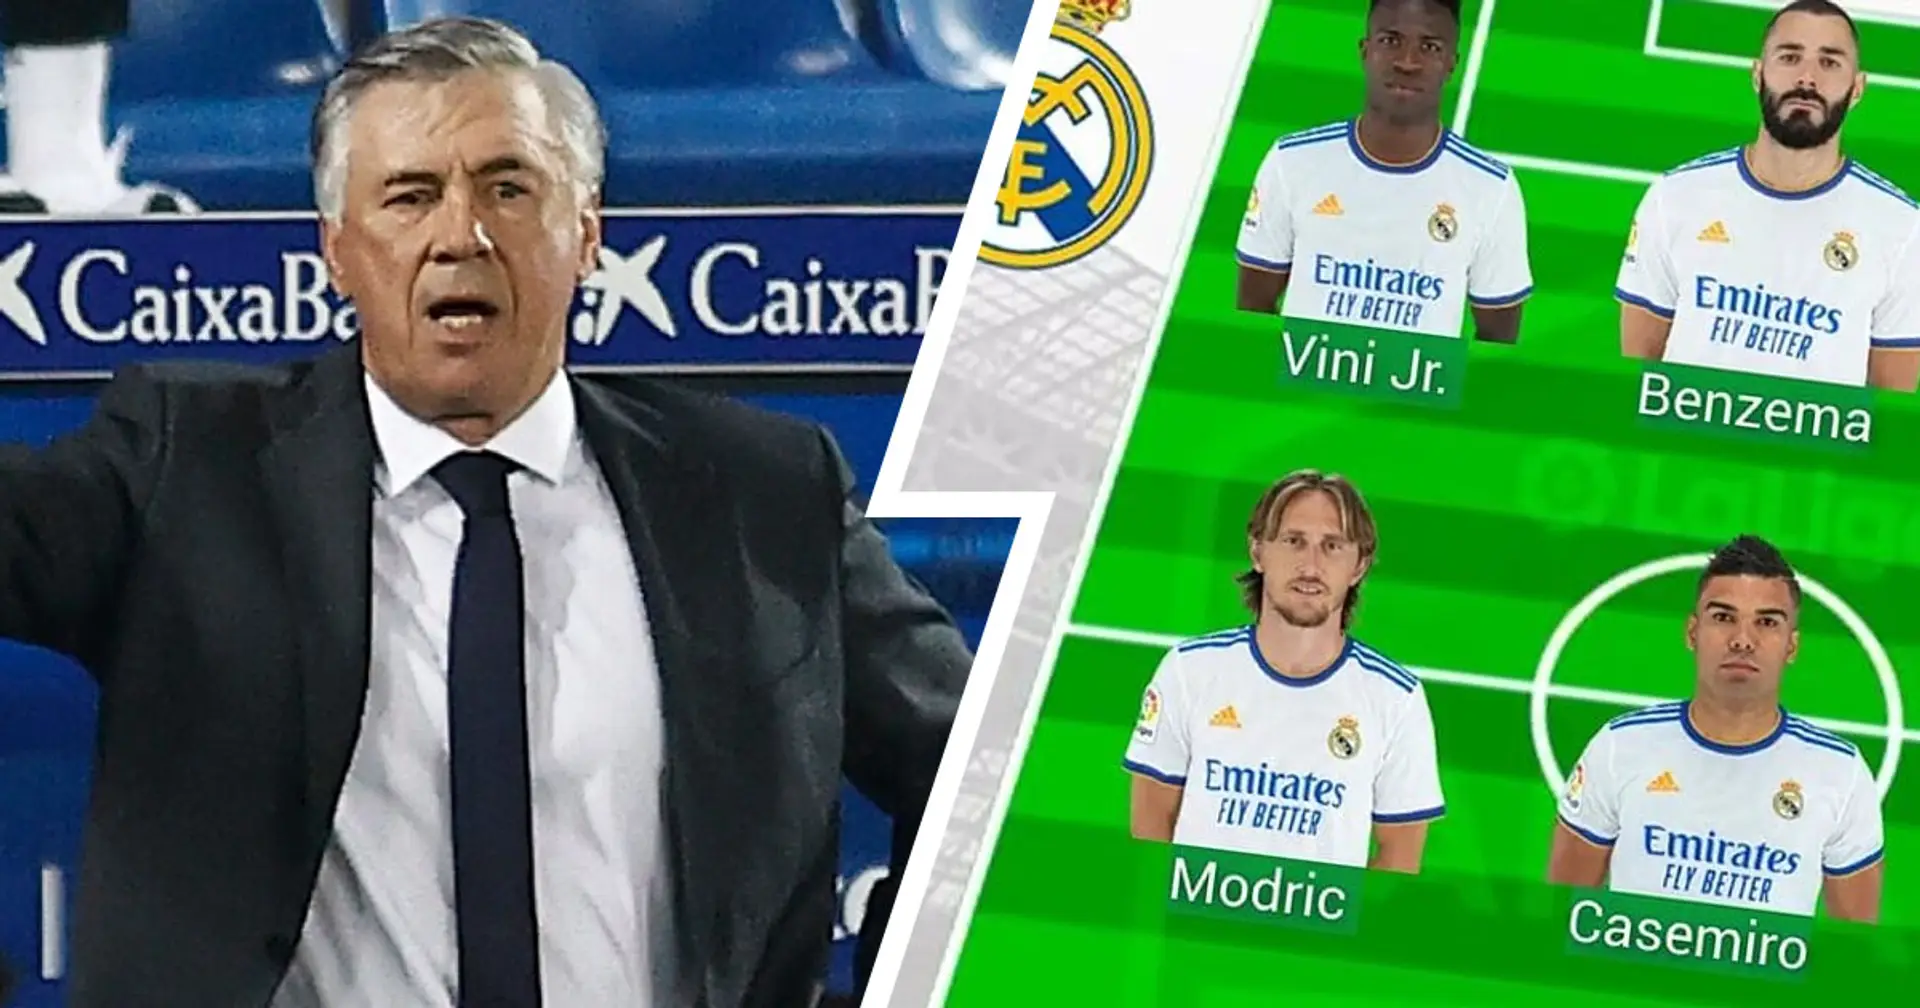 Team news for Real Madrid vs Celta Vigo, probable line-ups